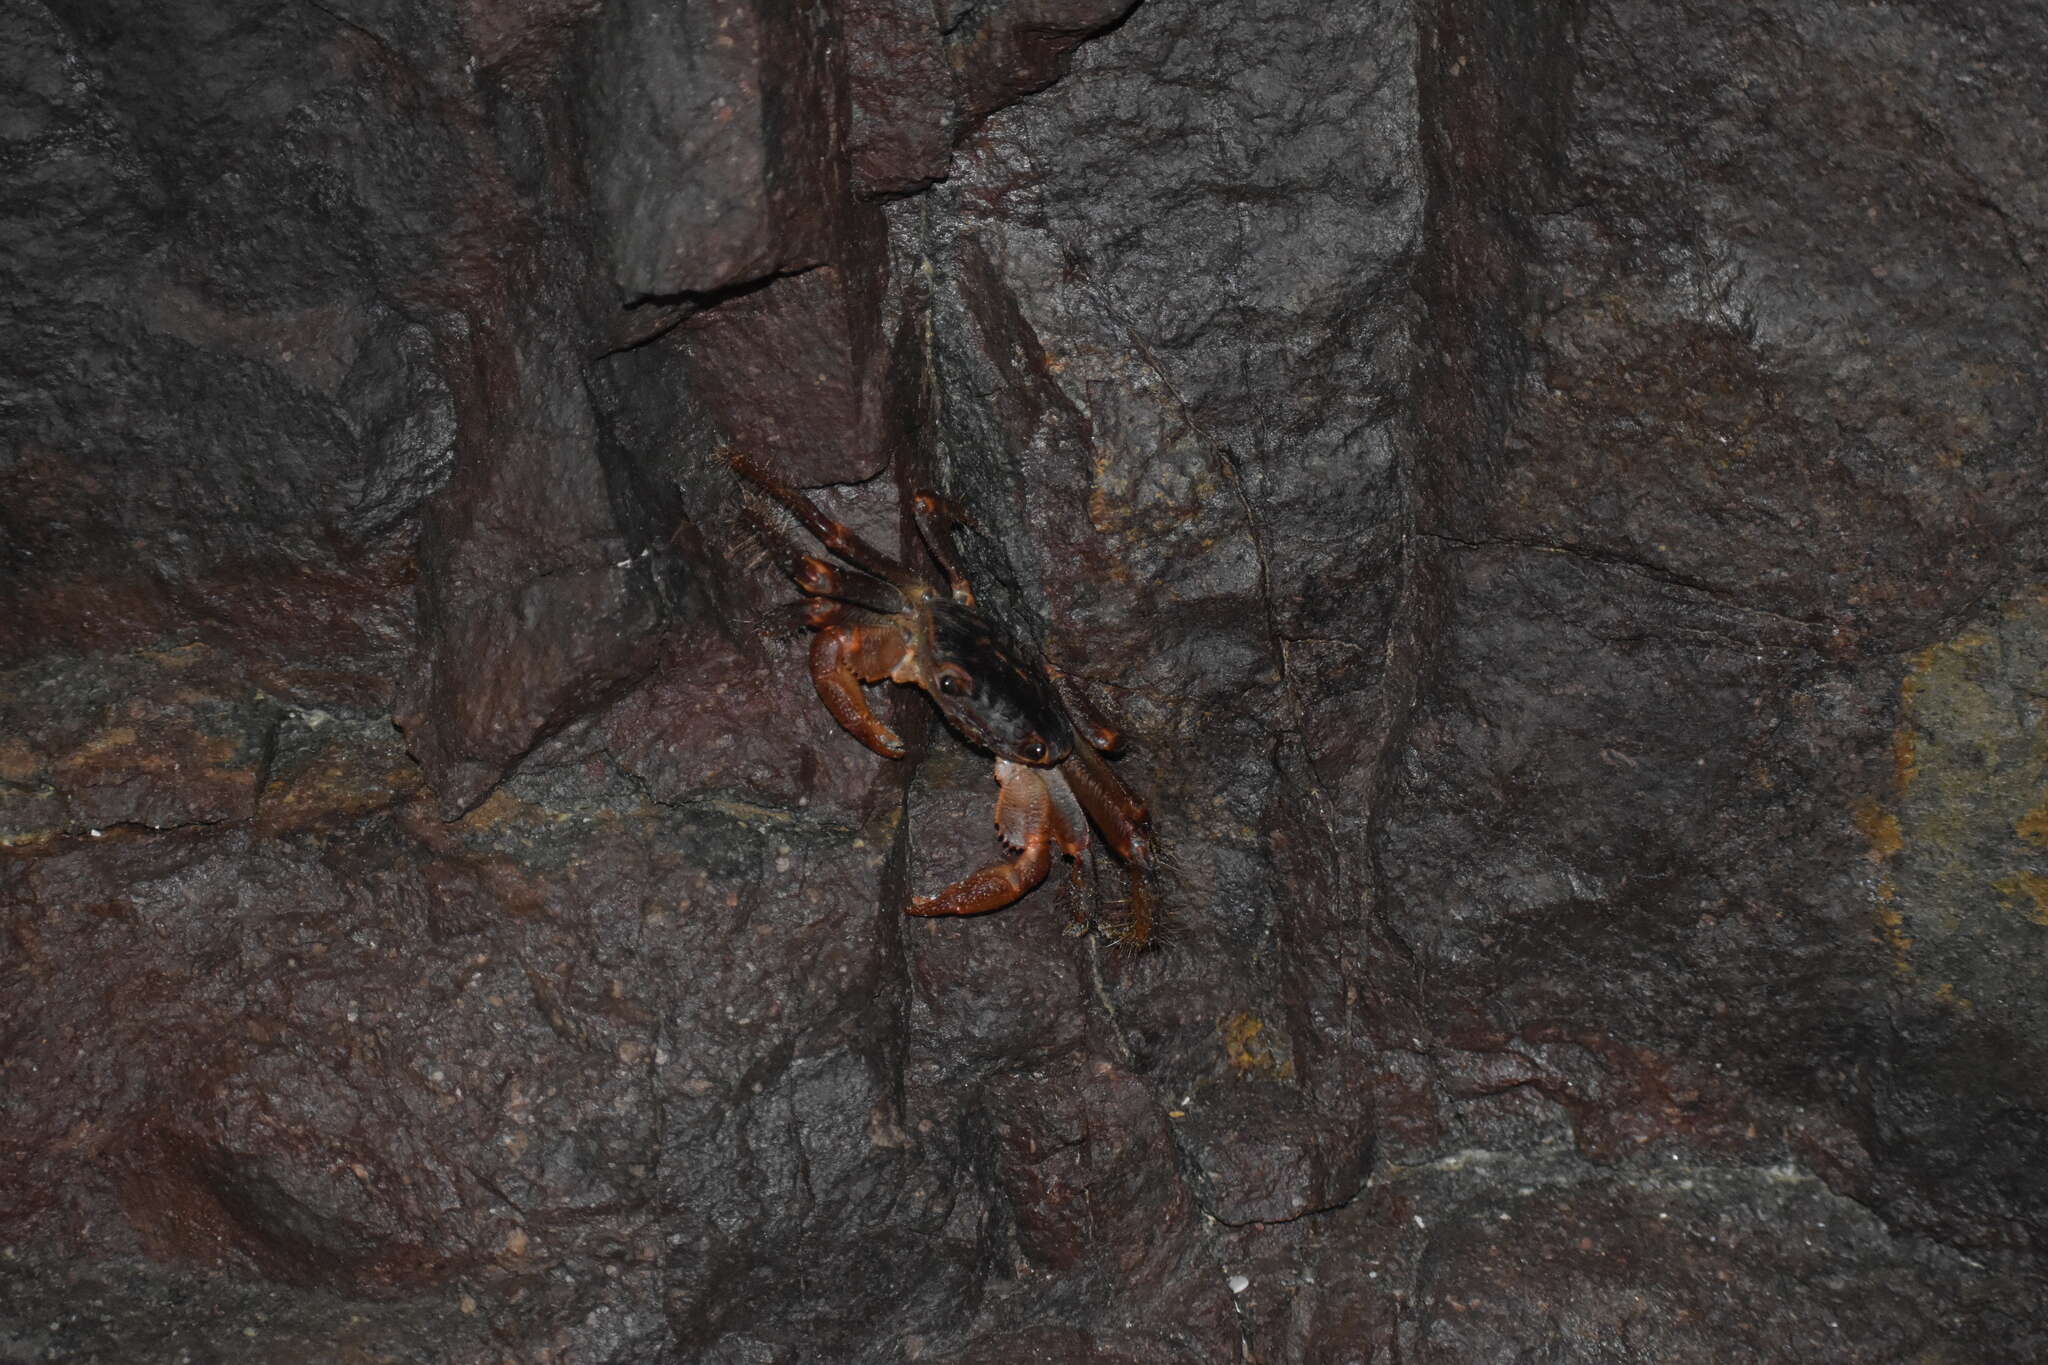 Image of variegate shore crab